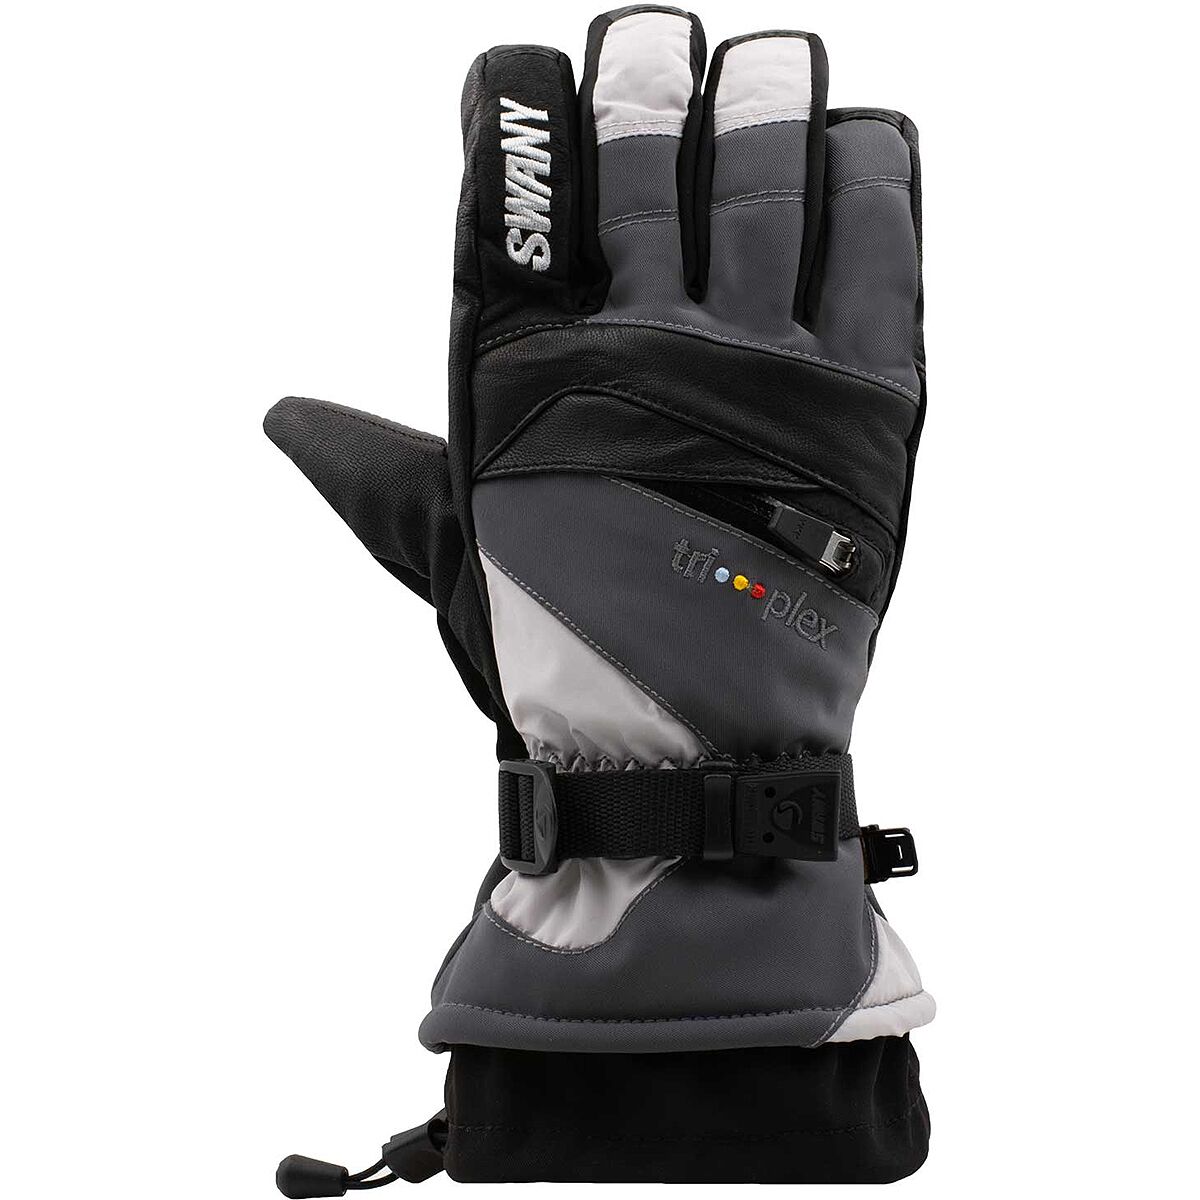 Swany X-Change Glove - Men's Light Grey/Charcoal Grey